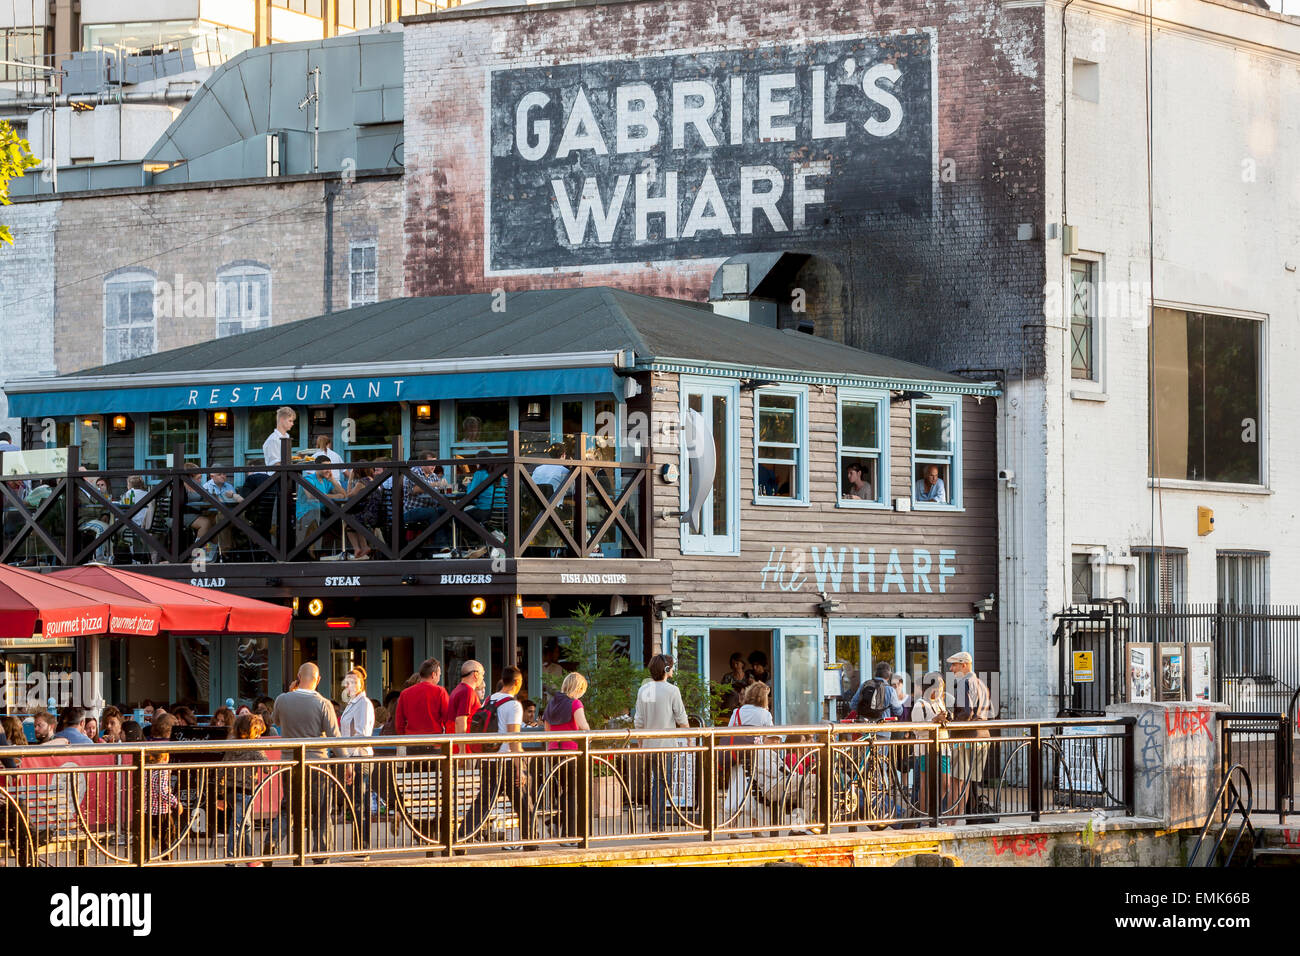 Gabriel's Wharf, restaurant, pub on the Thames, Southwark, South Bank, London, England, United Kingdom Stock Photo